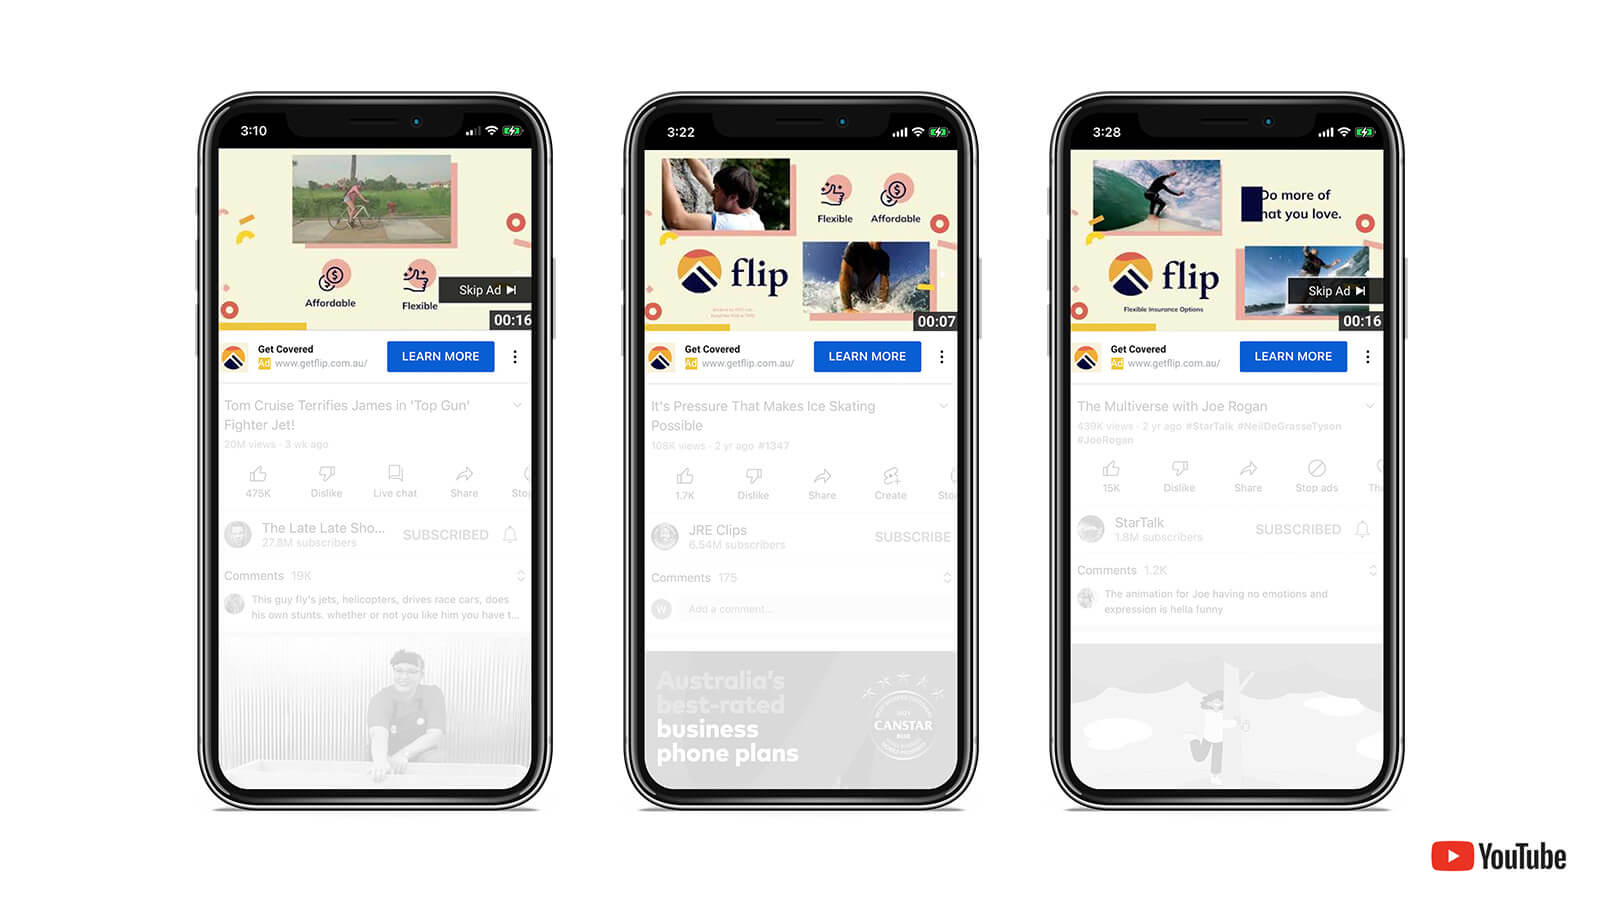 Flip Insurance | Flip Insurance ads in Youtube shown on a series of smartphones | Devotion